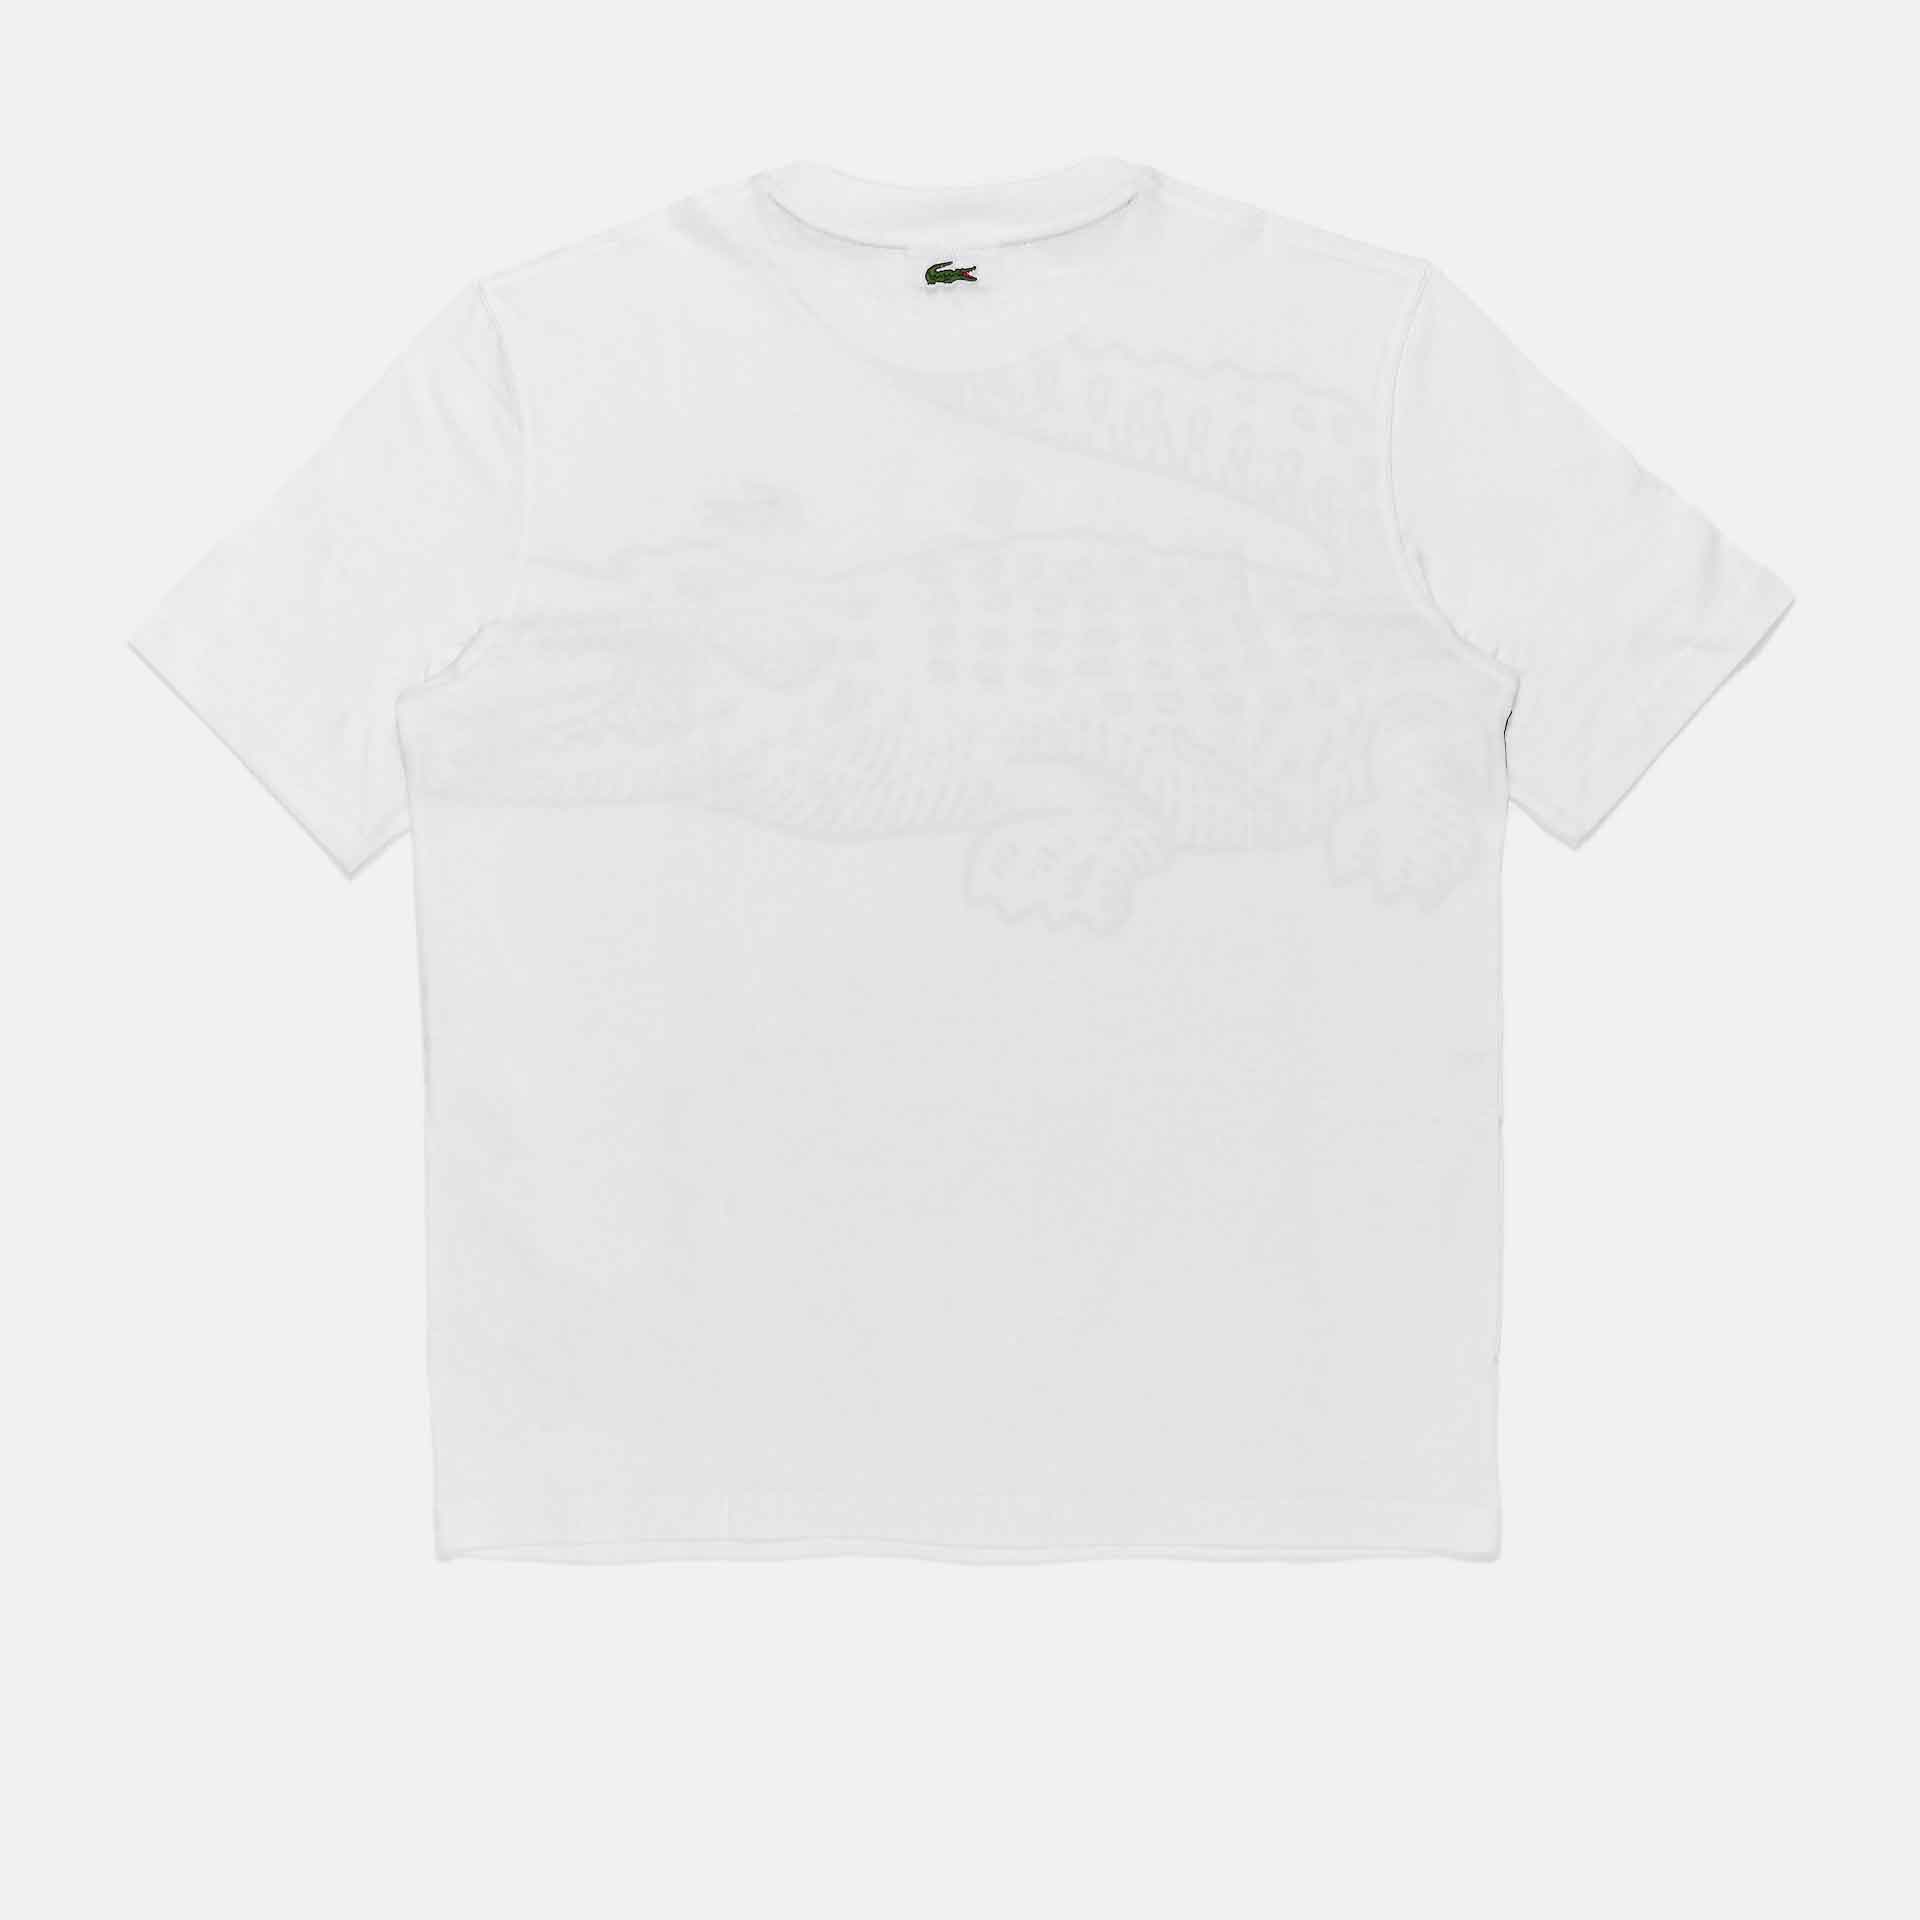 Lacoste Croco T-Shirt White